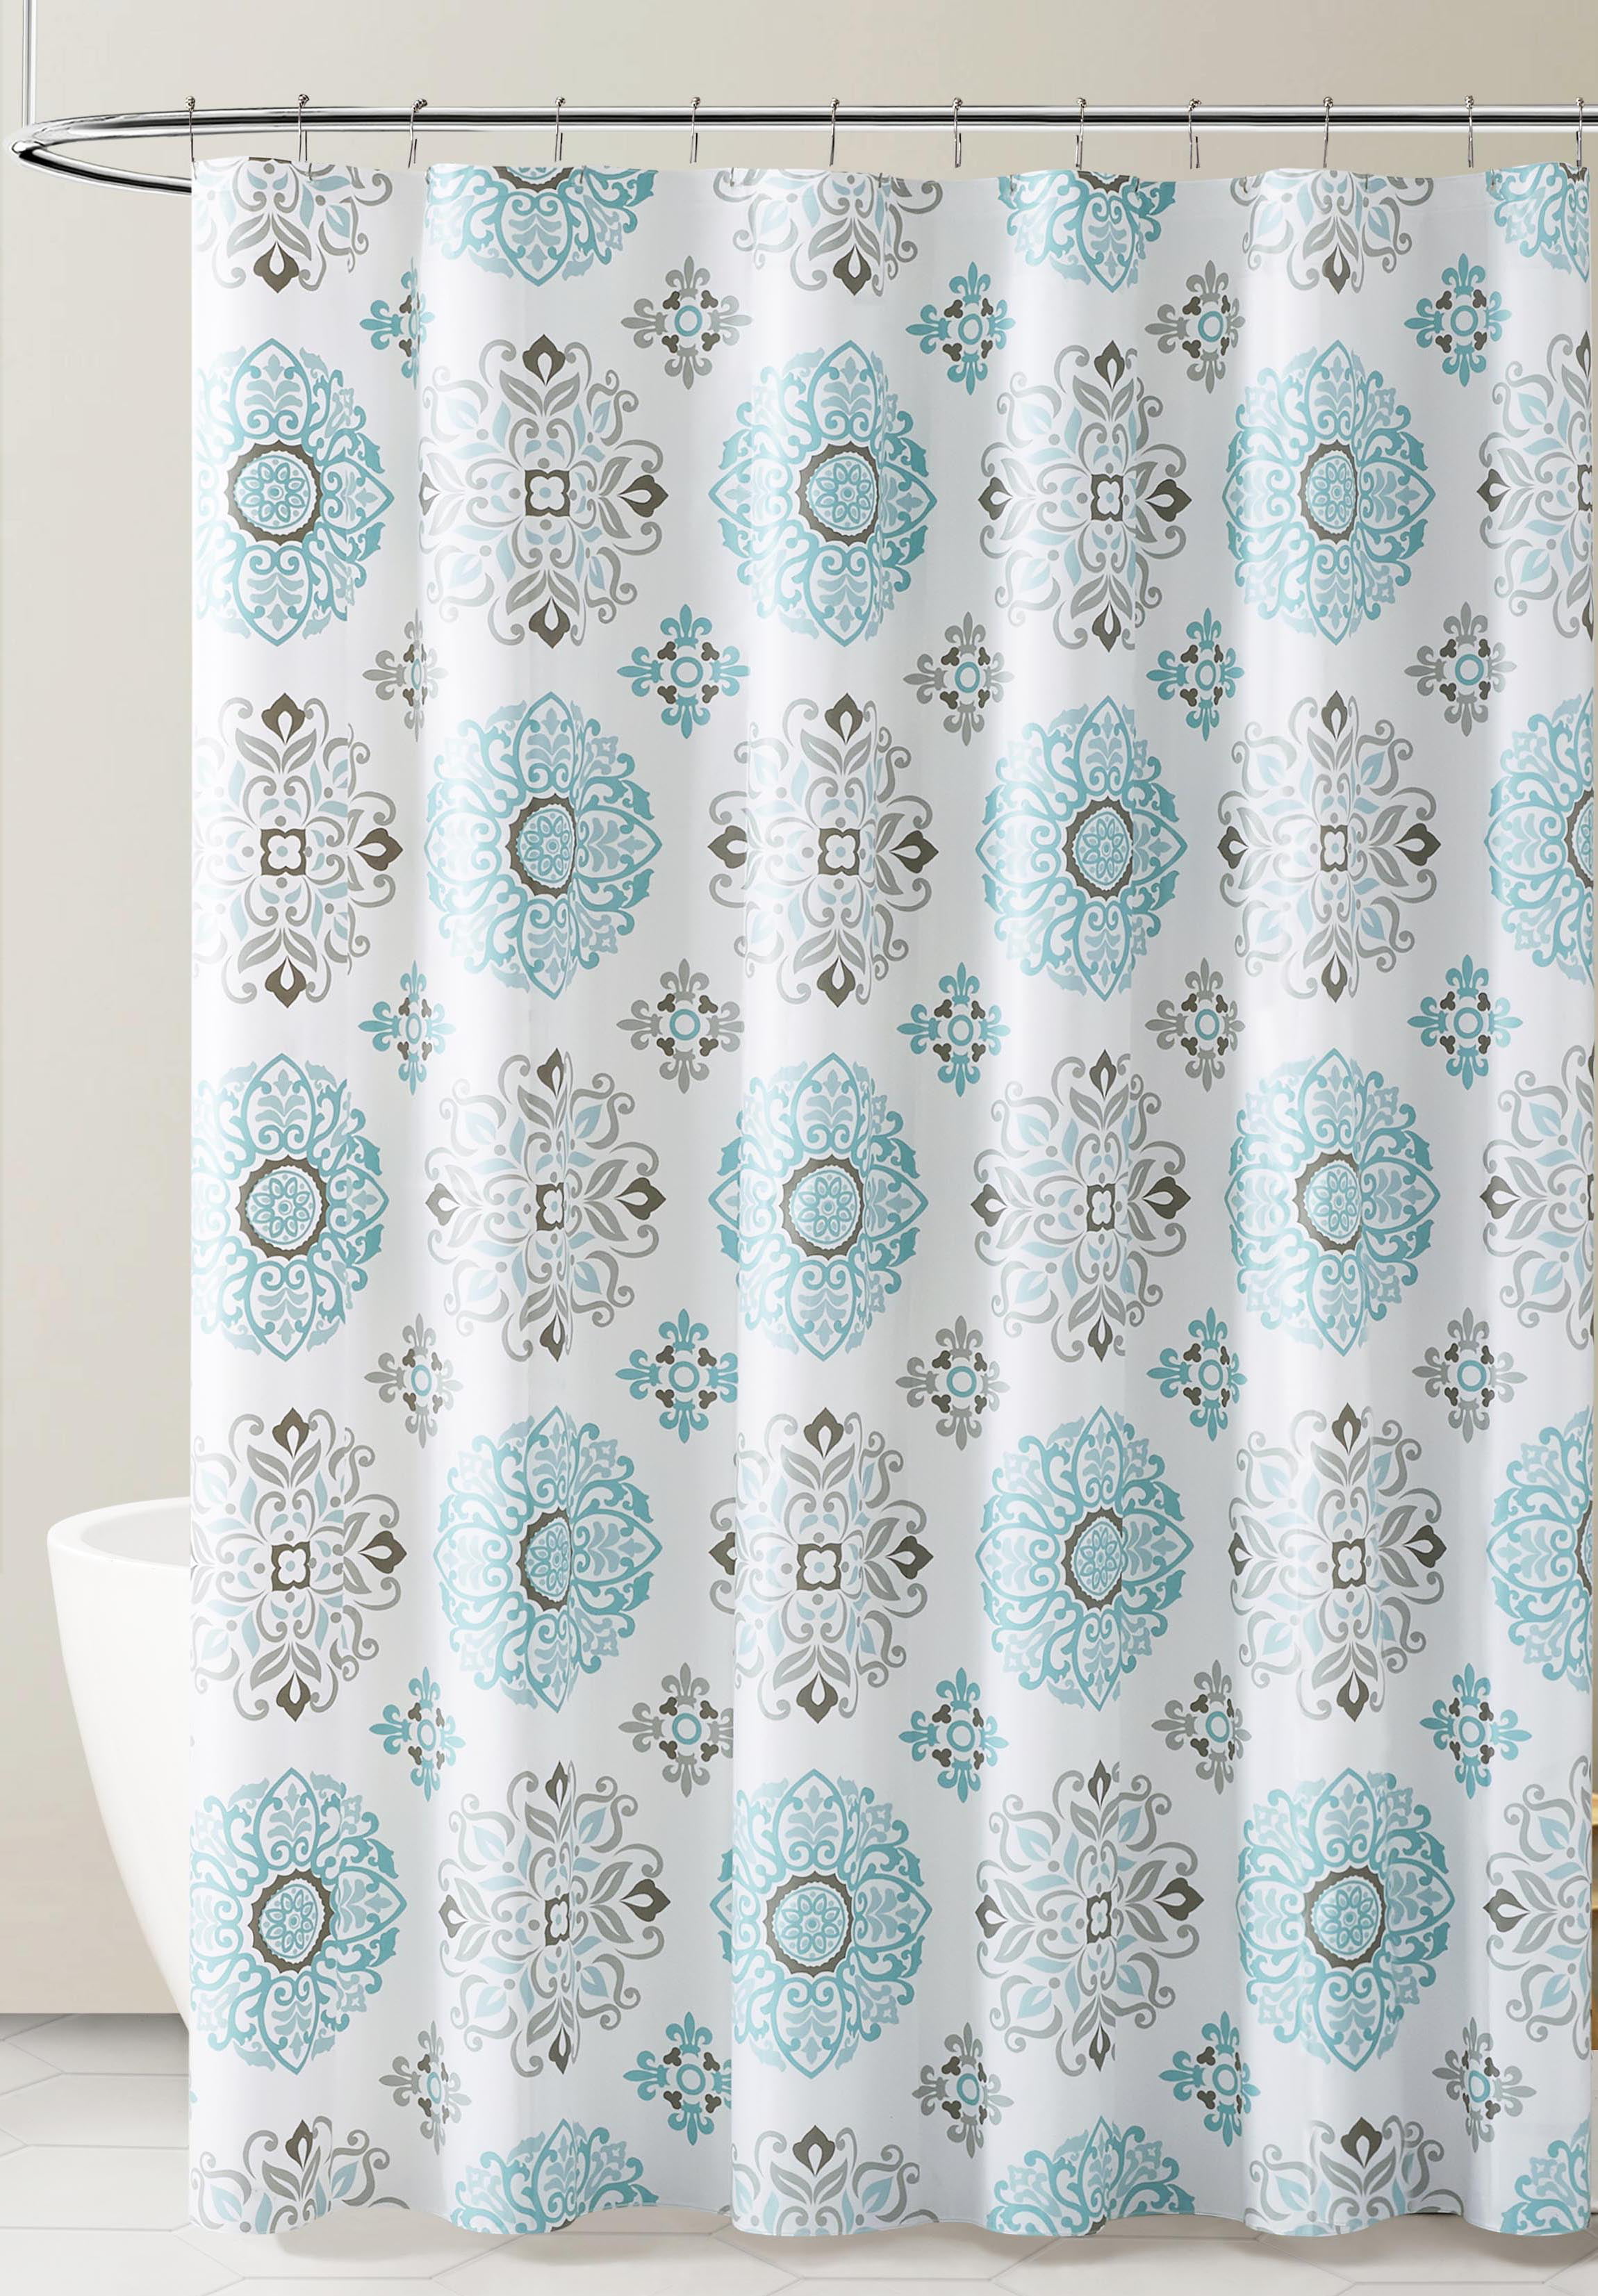 Peva Shower Curtain Liner Odorless Pvc, Is Peva Safe In Shower Curtains